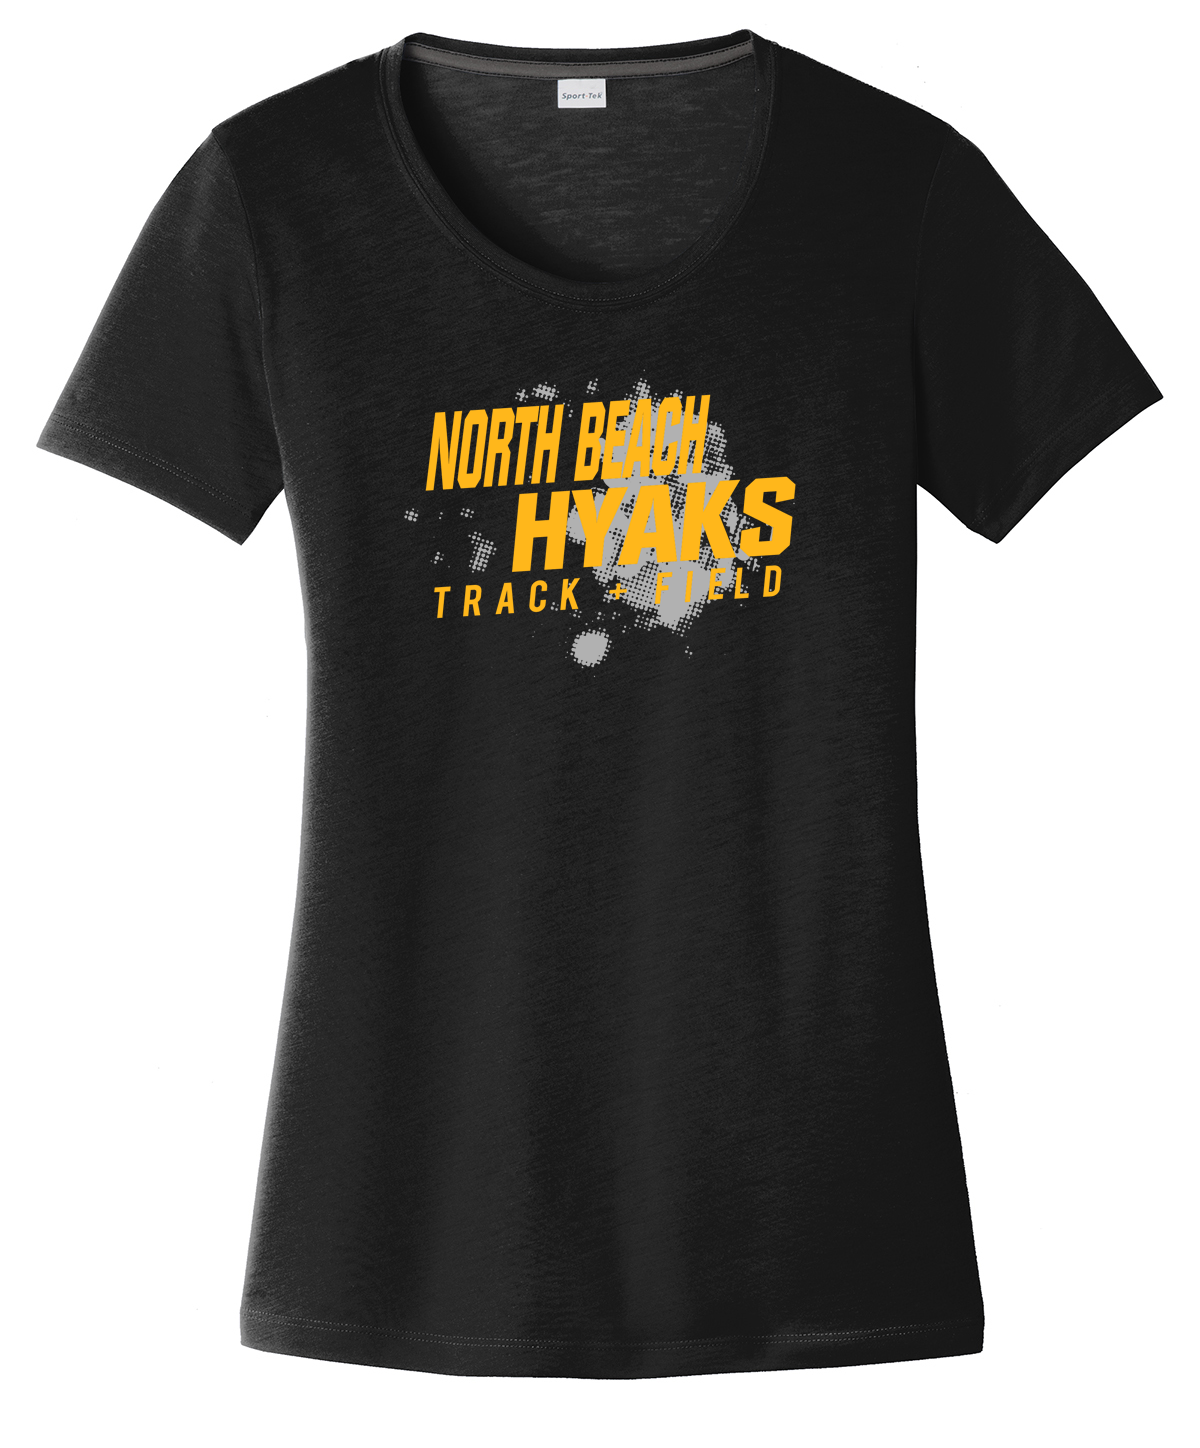 North Beach Track & Field Women's CottonTouch Performance T-Shirt